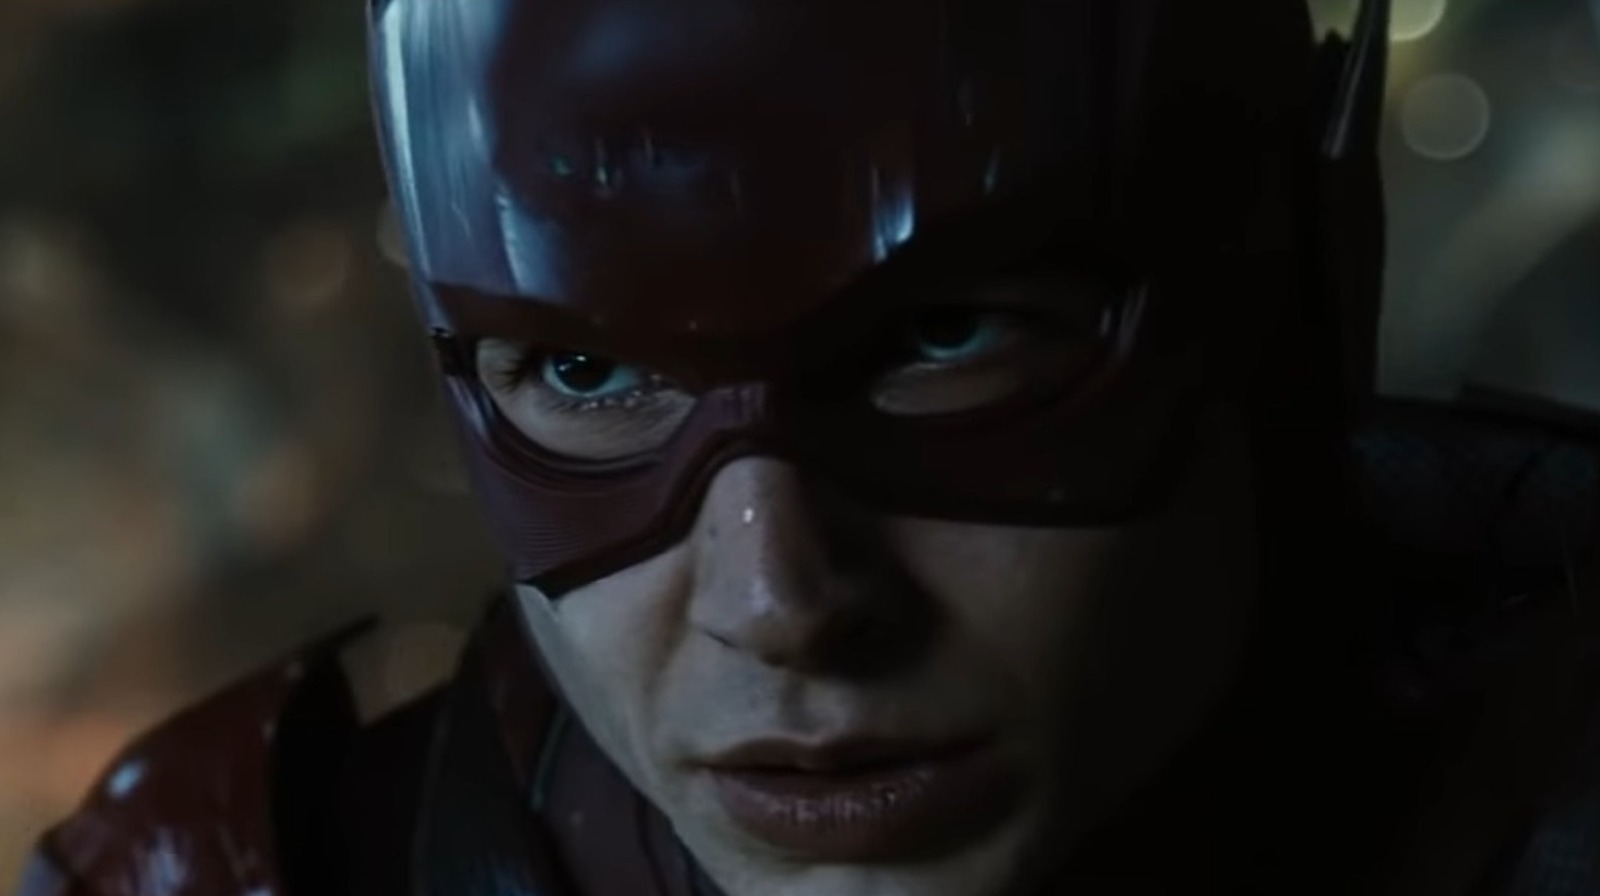 The Flash CinemaCon Trailer Teases The Return Of A Classic Batman